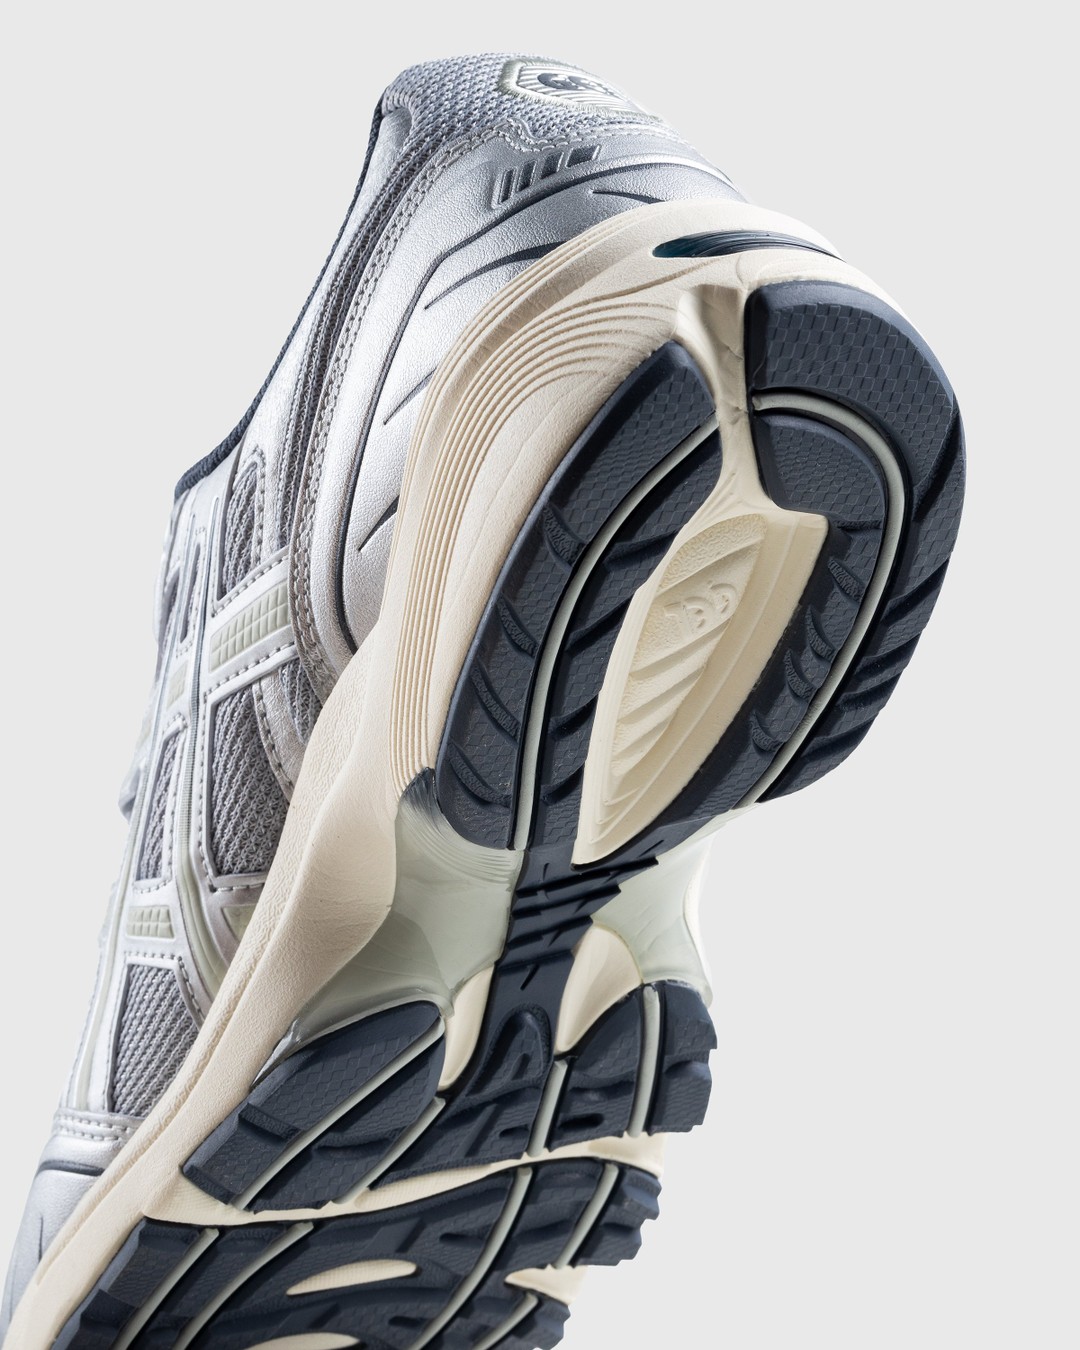 asics – GEL-1090 Piedmont Gray/Tarmac - Sneakers - Grey - Image 6